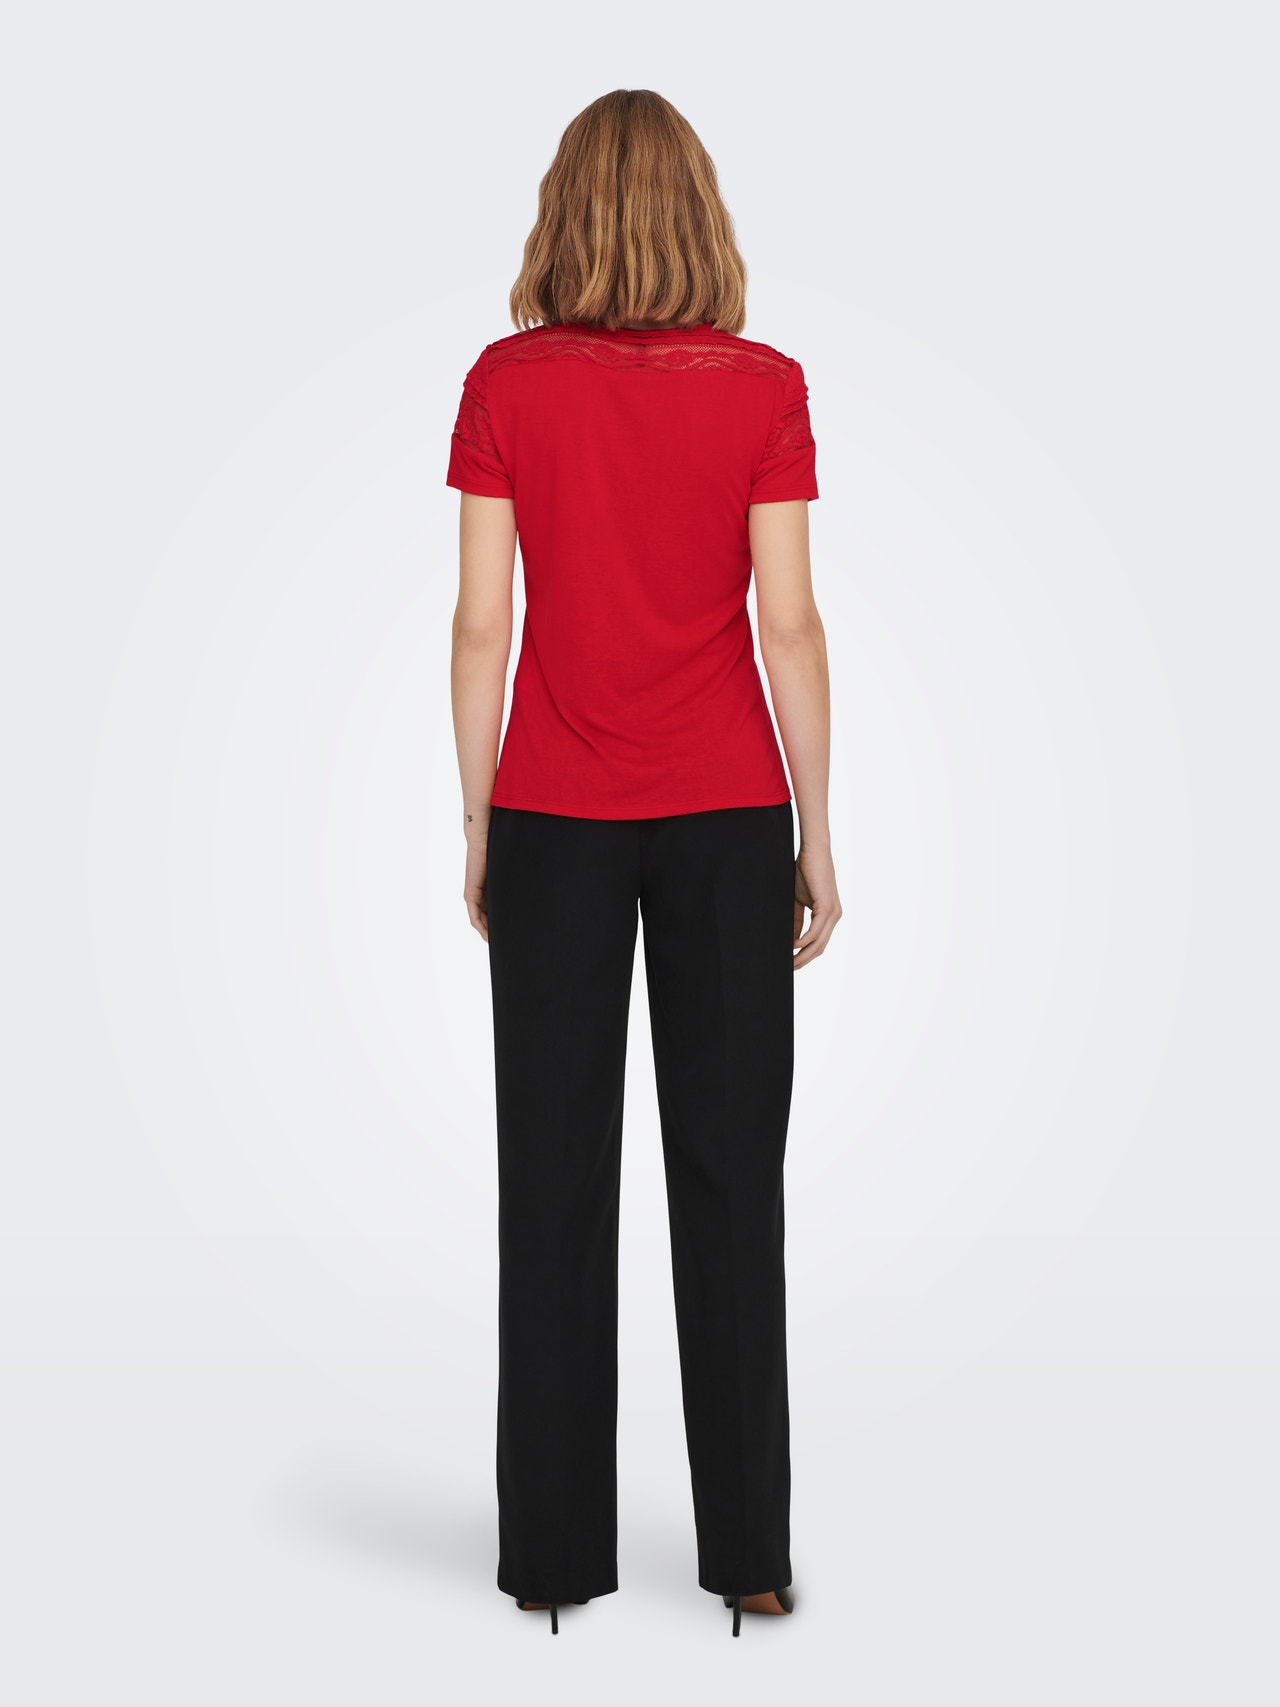 ONLY T-shirt med Blondedetalje -High Risk Red - 15287209